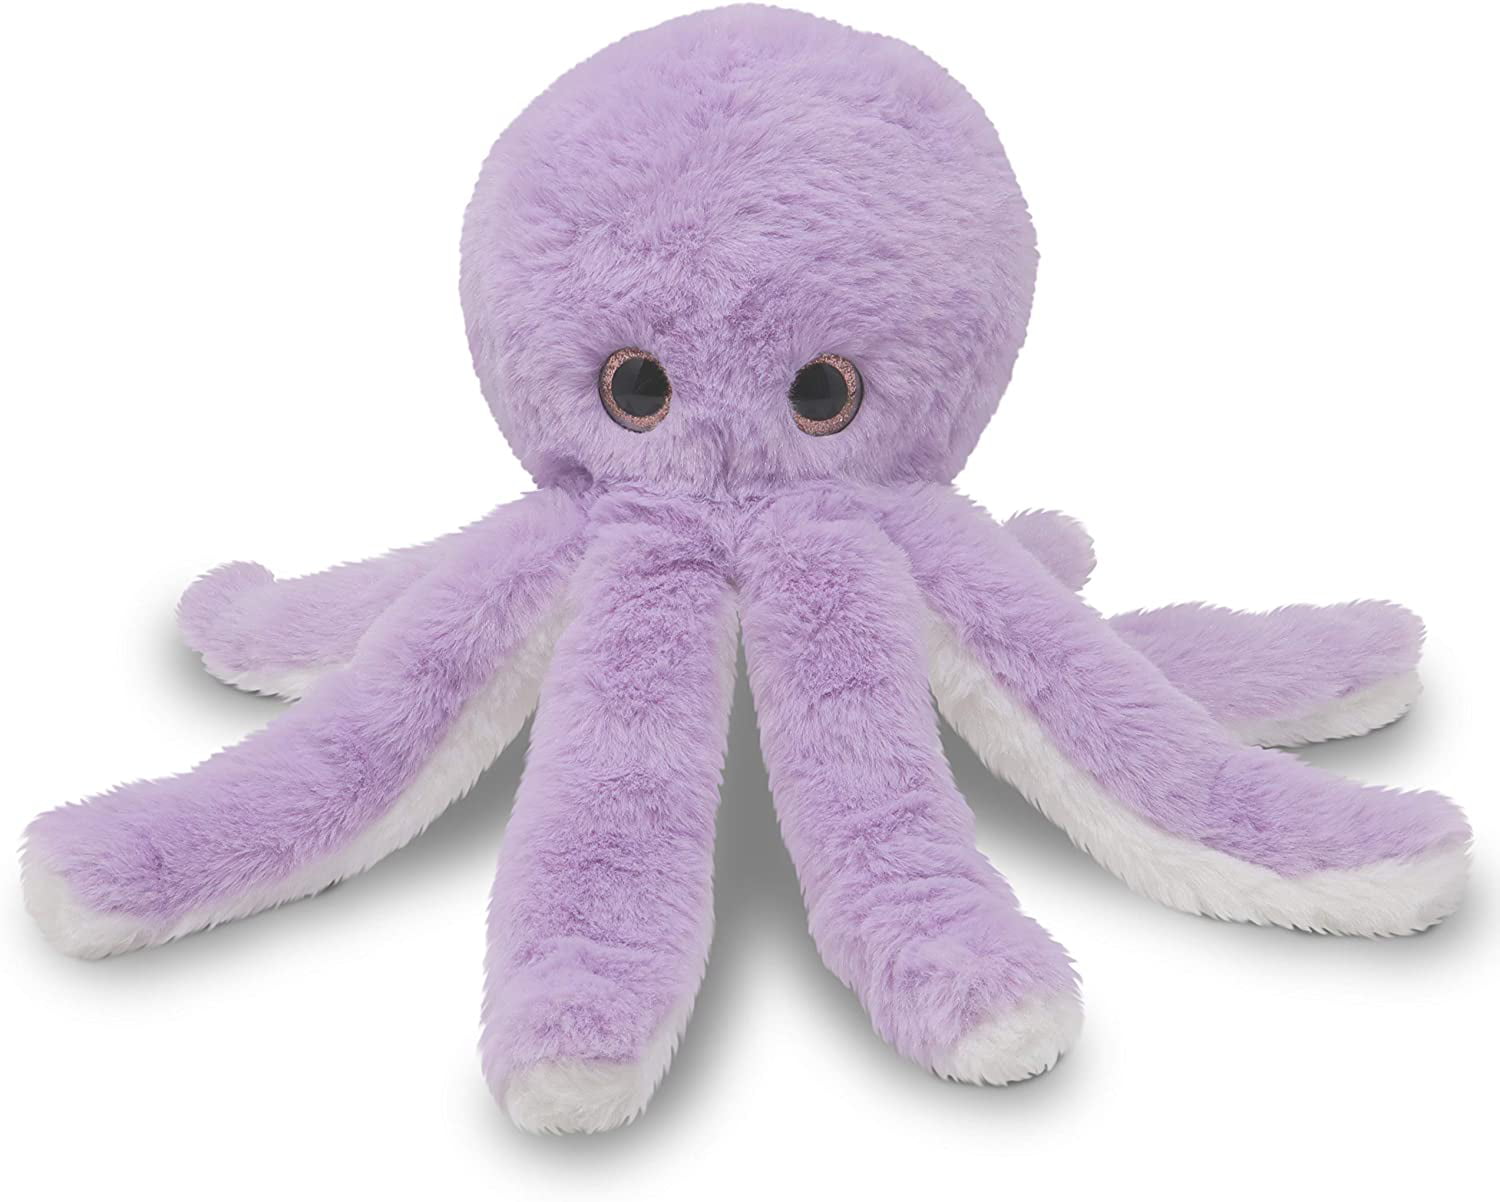 HHHC Octopus Stuffed Animal - Stuffed Octopus HHHC - 12 Inches (Purple ...